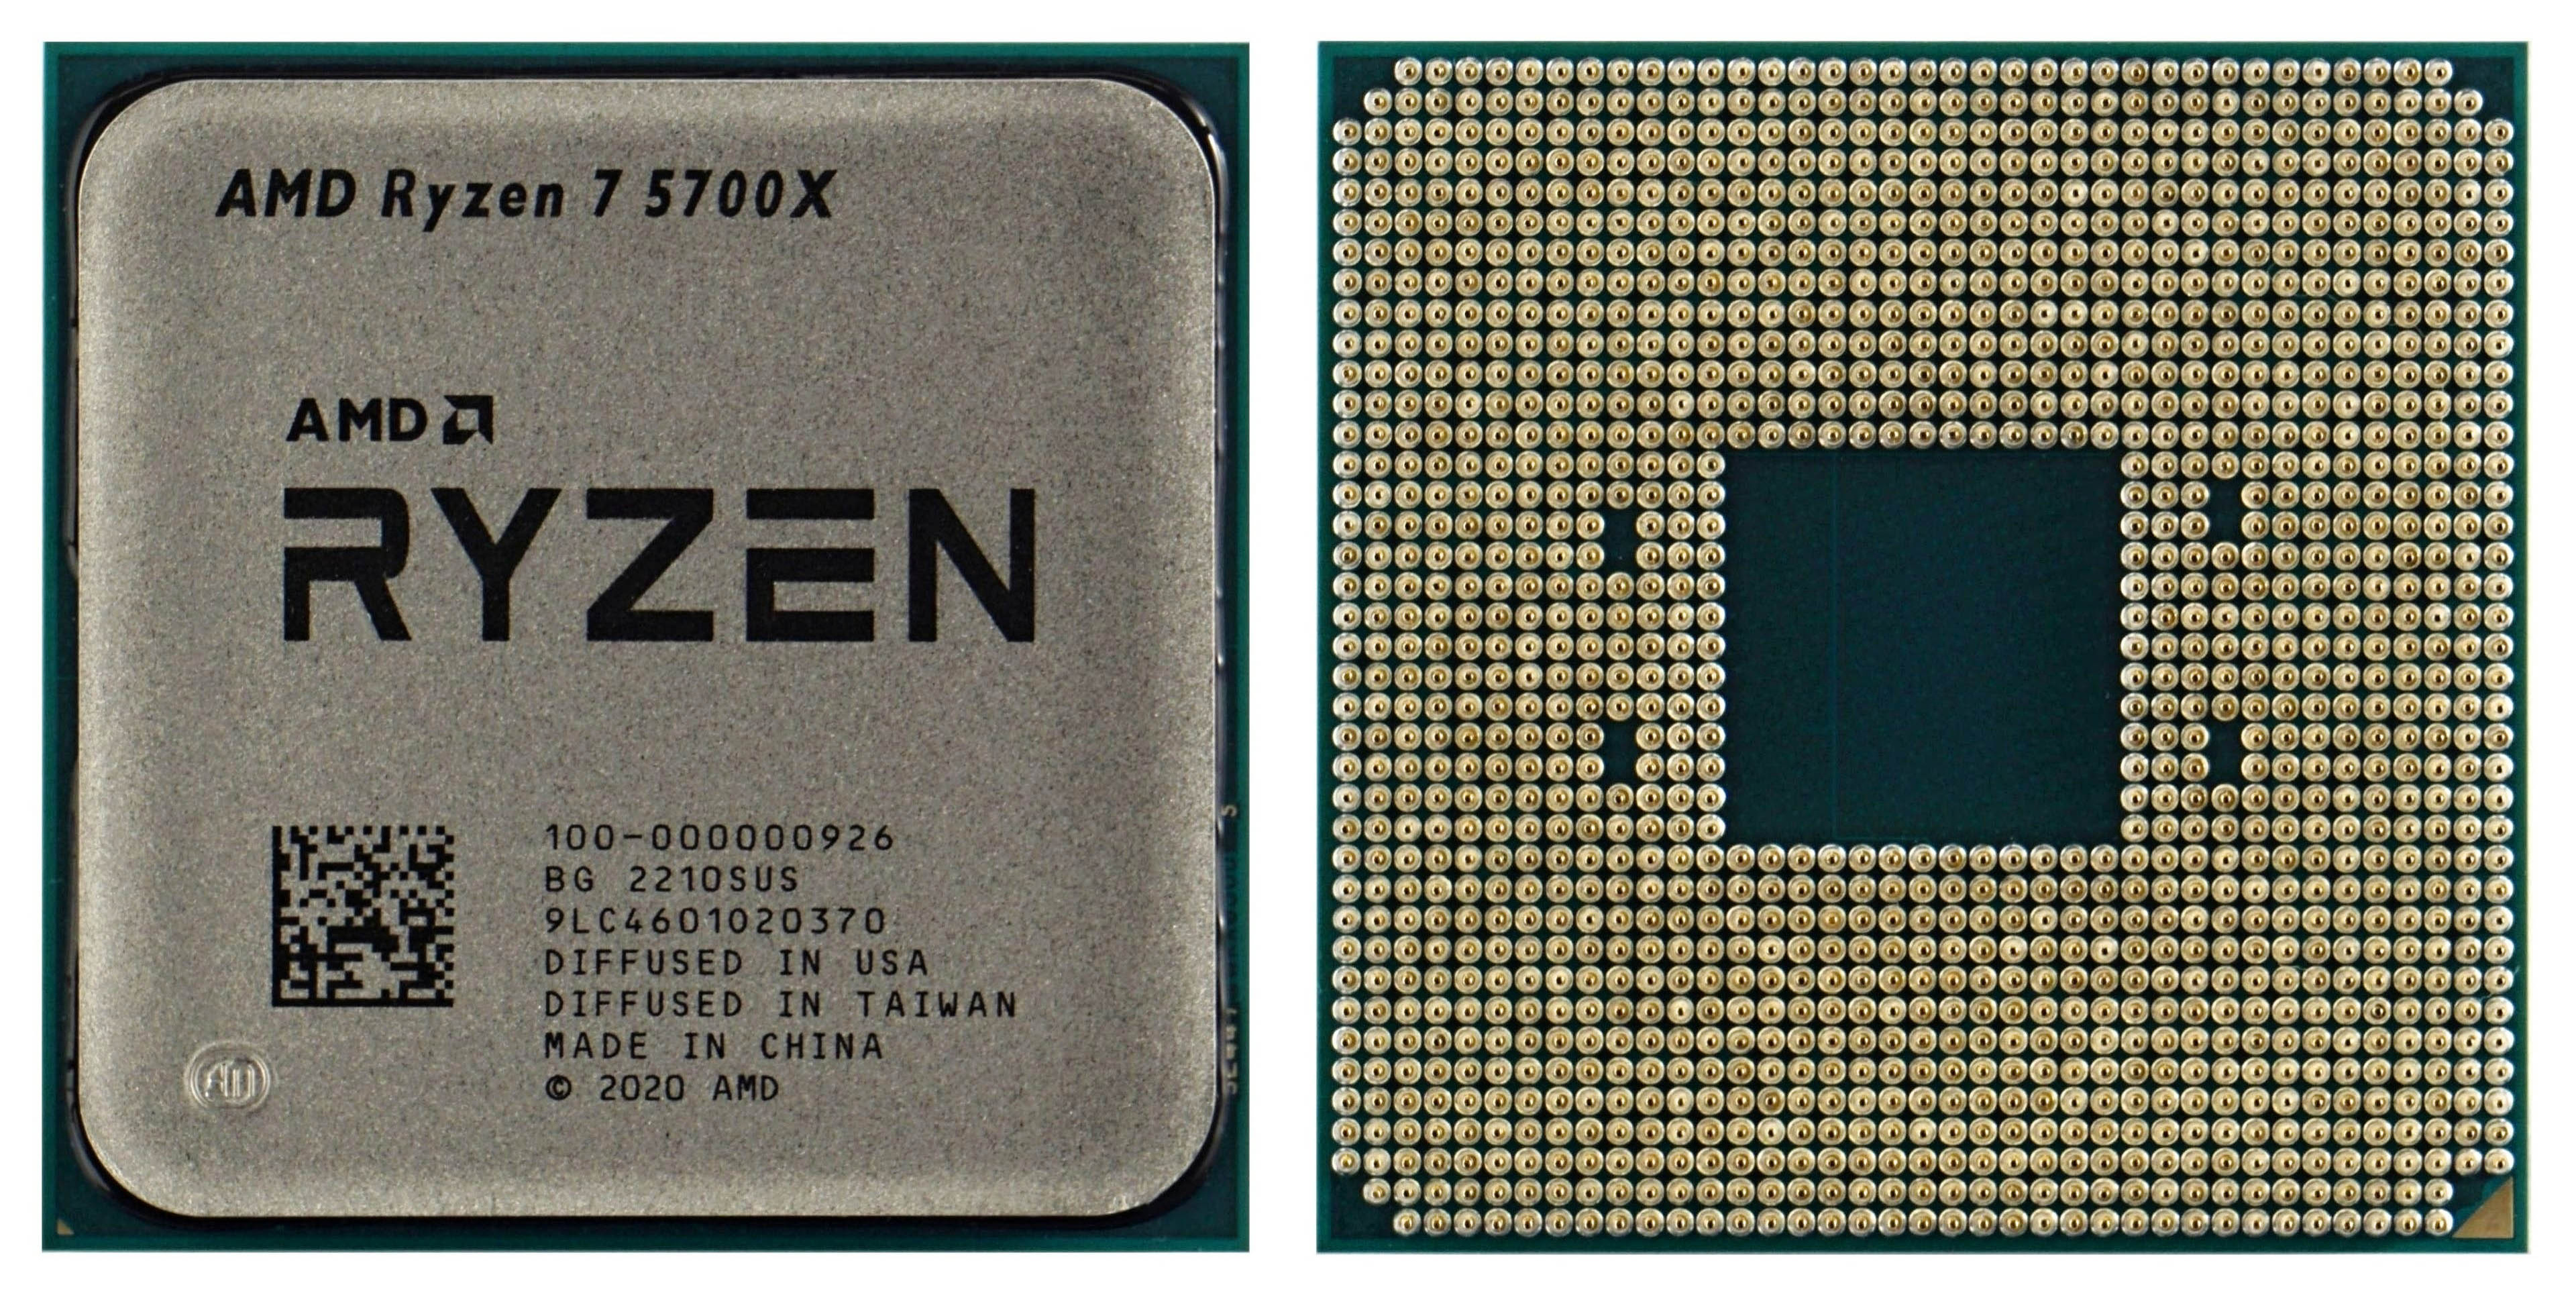 Comparing 4 Generations of Ryzen 7 CPUs! 7700X vs 5700X vs 3700X vs 2700X 